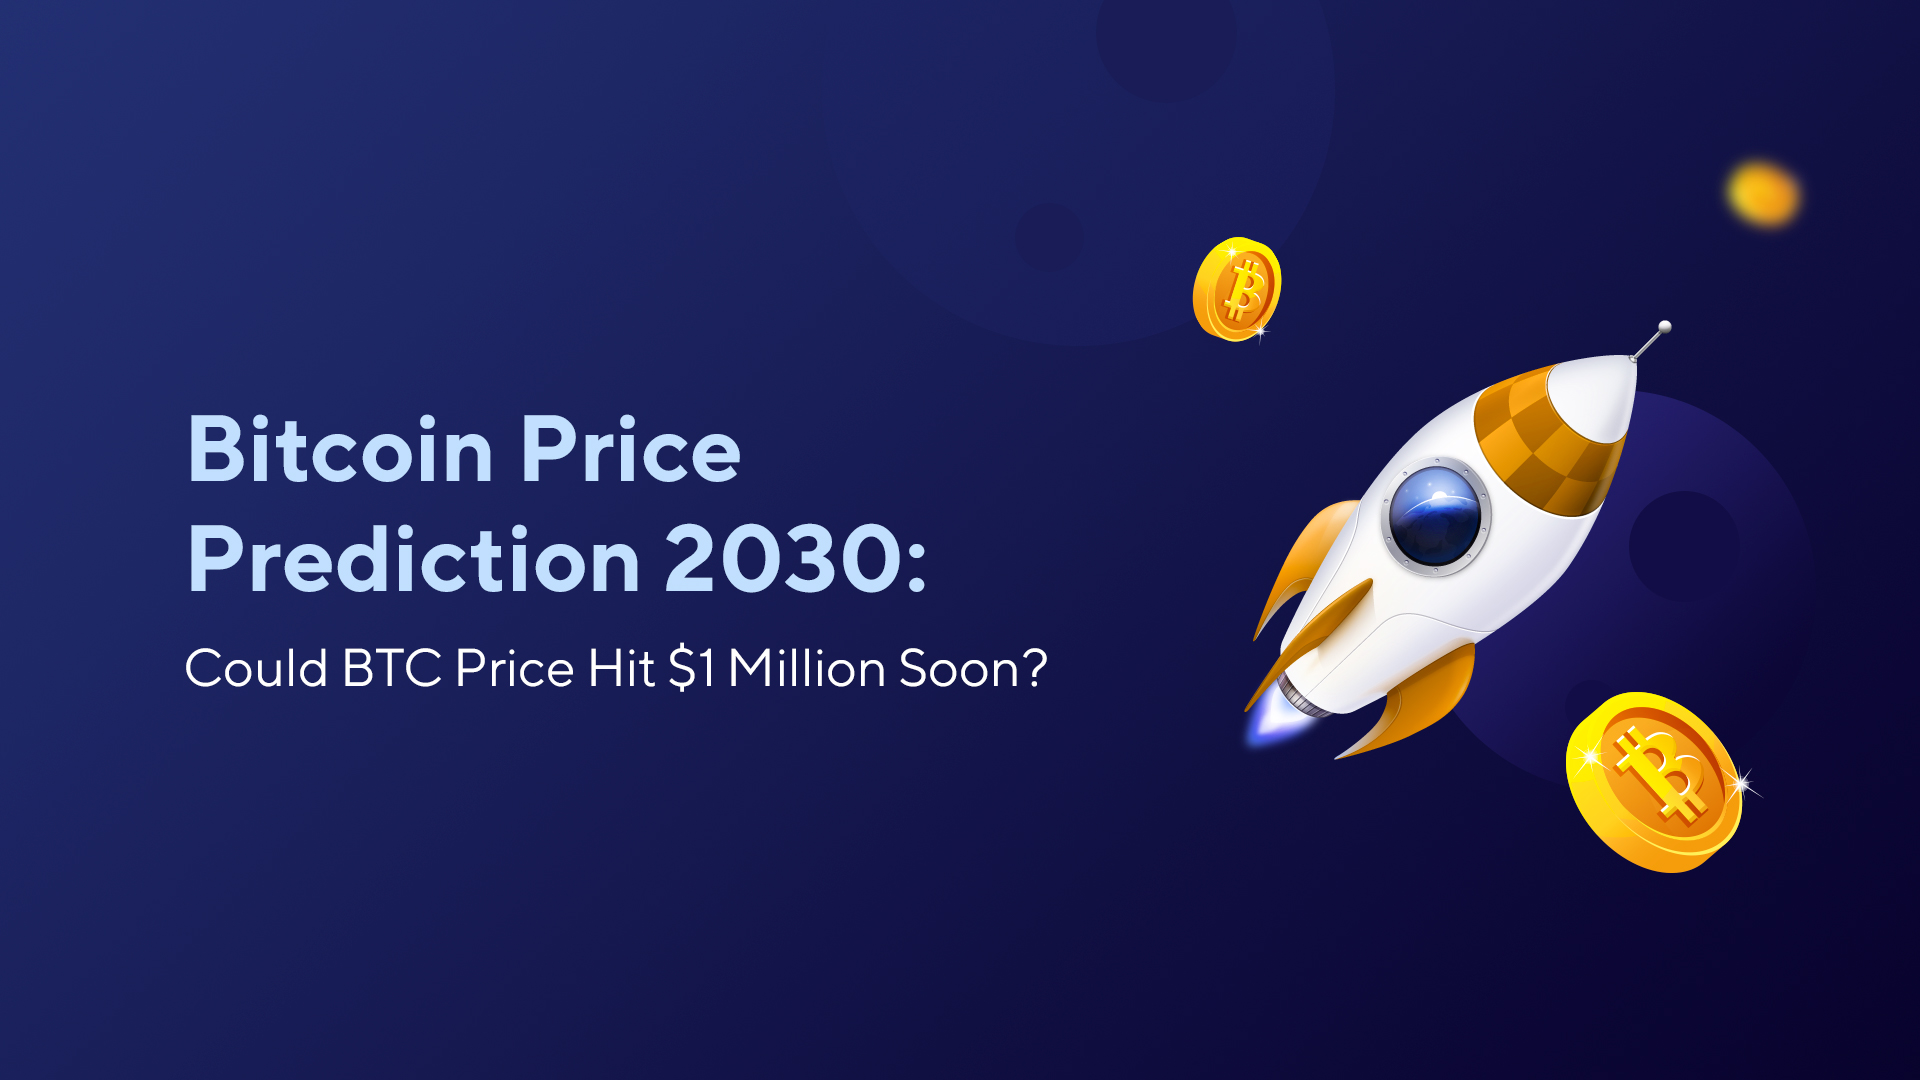 Bitcoin Price Prediction 2030: Could BTC Price Hit $1 Million Soon?